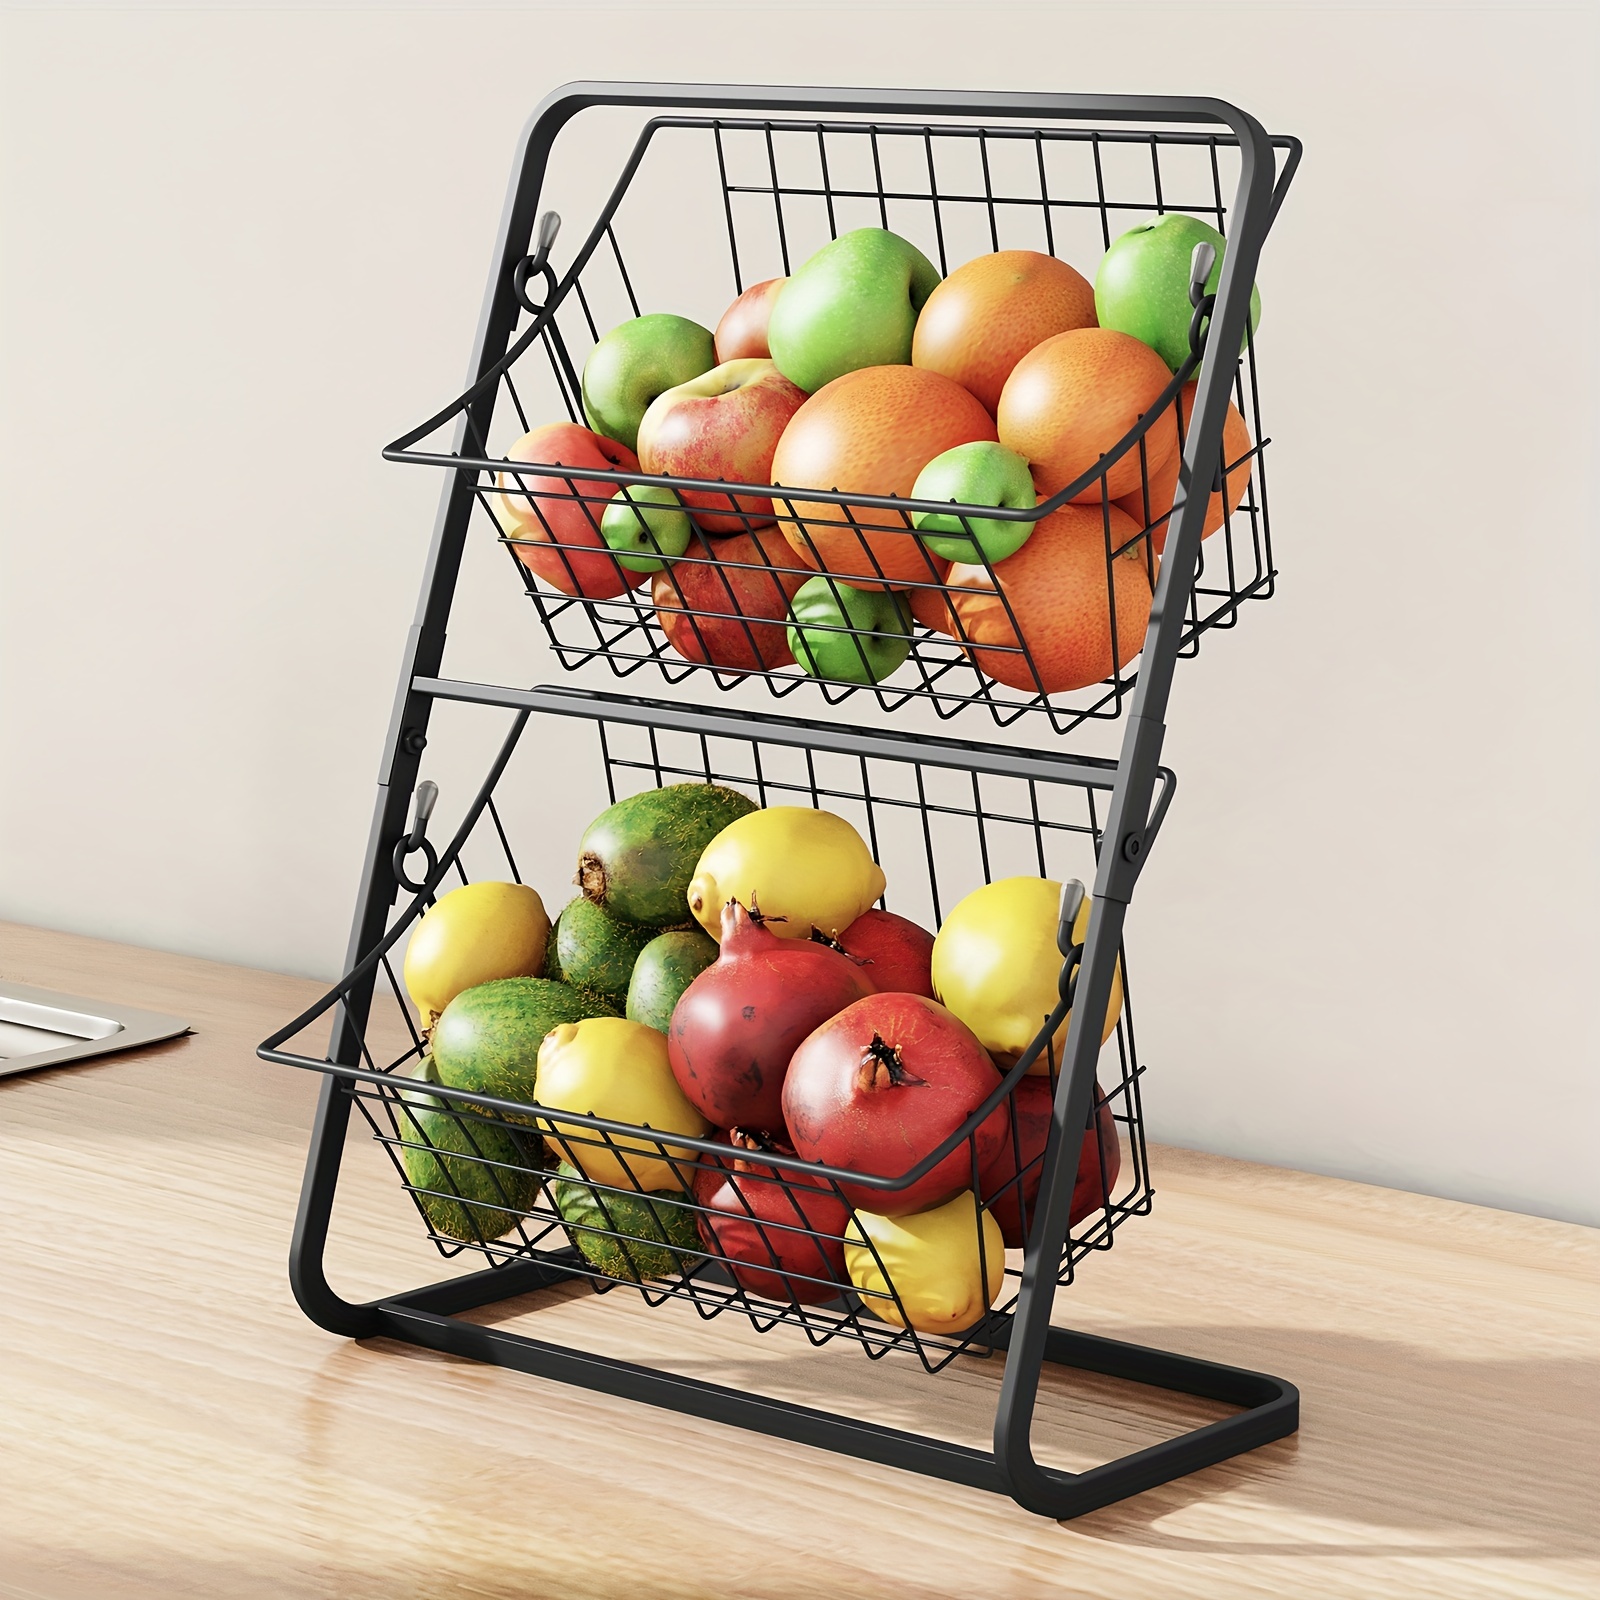 Cesta colgante de frutas, cesta de pared tejida de yute de 3 niveles hecha  a mano para organizar, cesta colgante de productos y frutas para